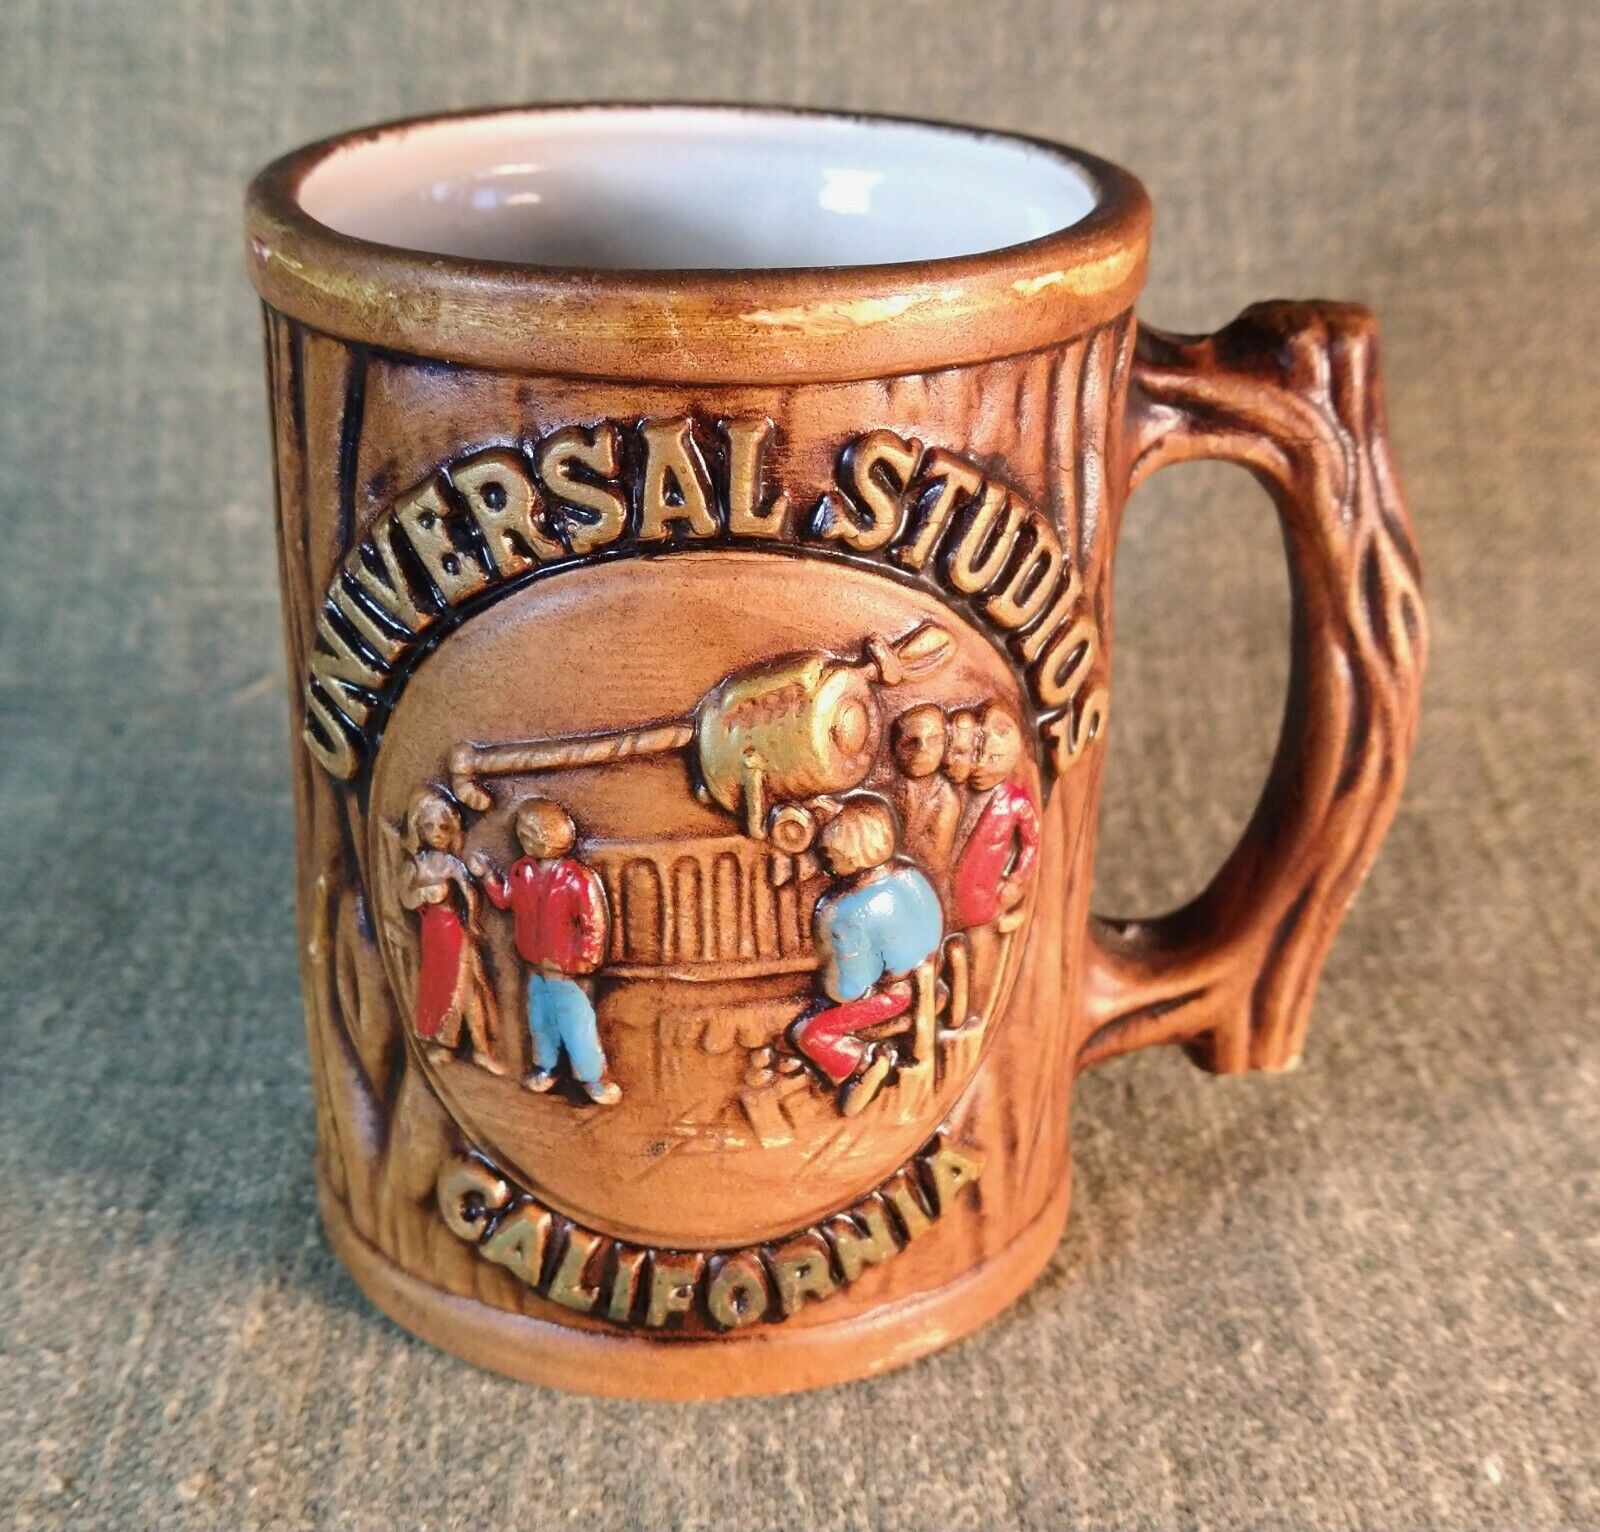 UNIVERSAL STUDIOS TOUR MUG Vintage 1964 California Souvenir Cup TIKI Witco Style